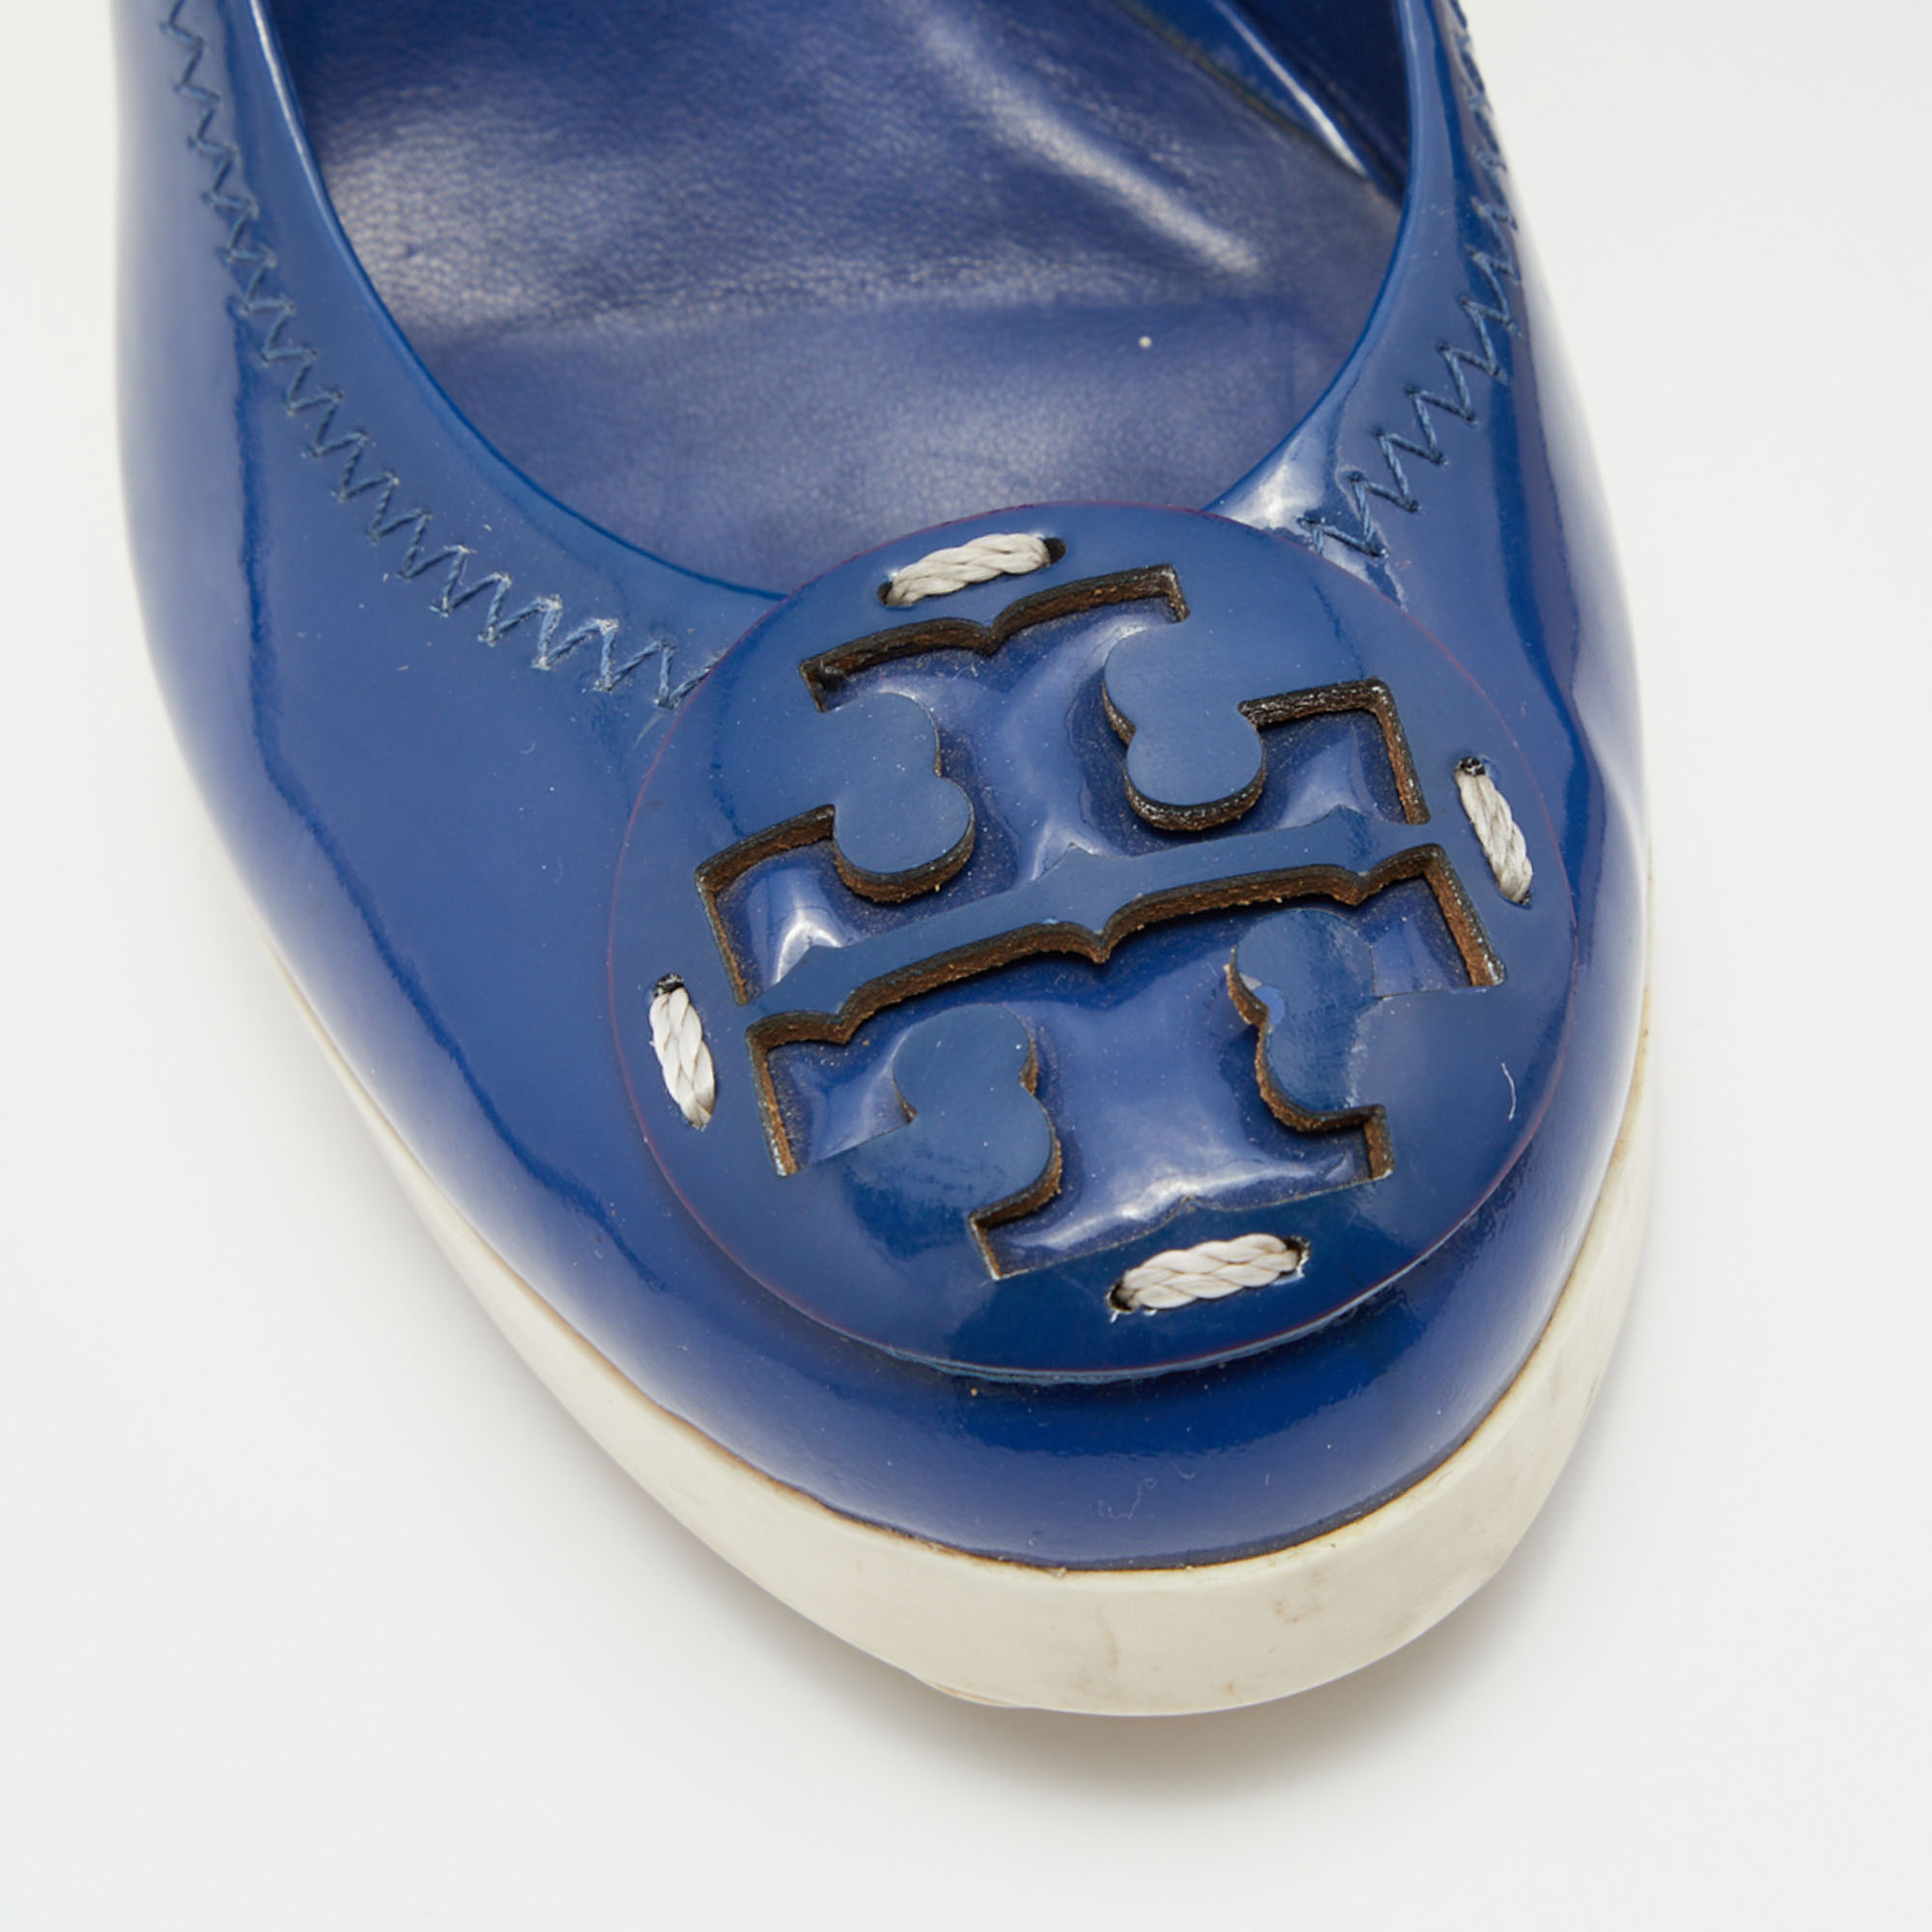 Tory Burch Navy Blue Patent Leather Logo Platform Wedge Pumps Size 37.5